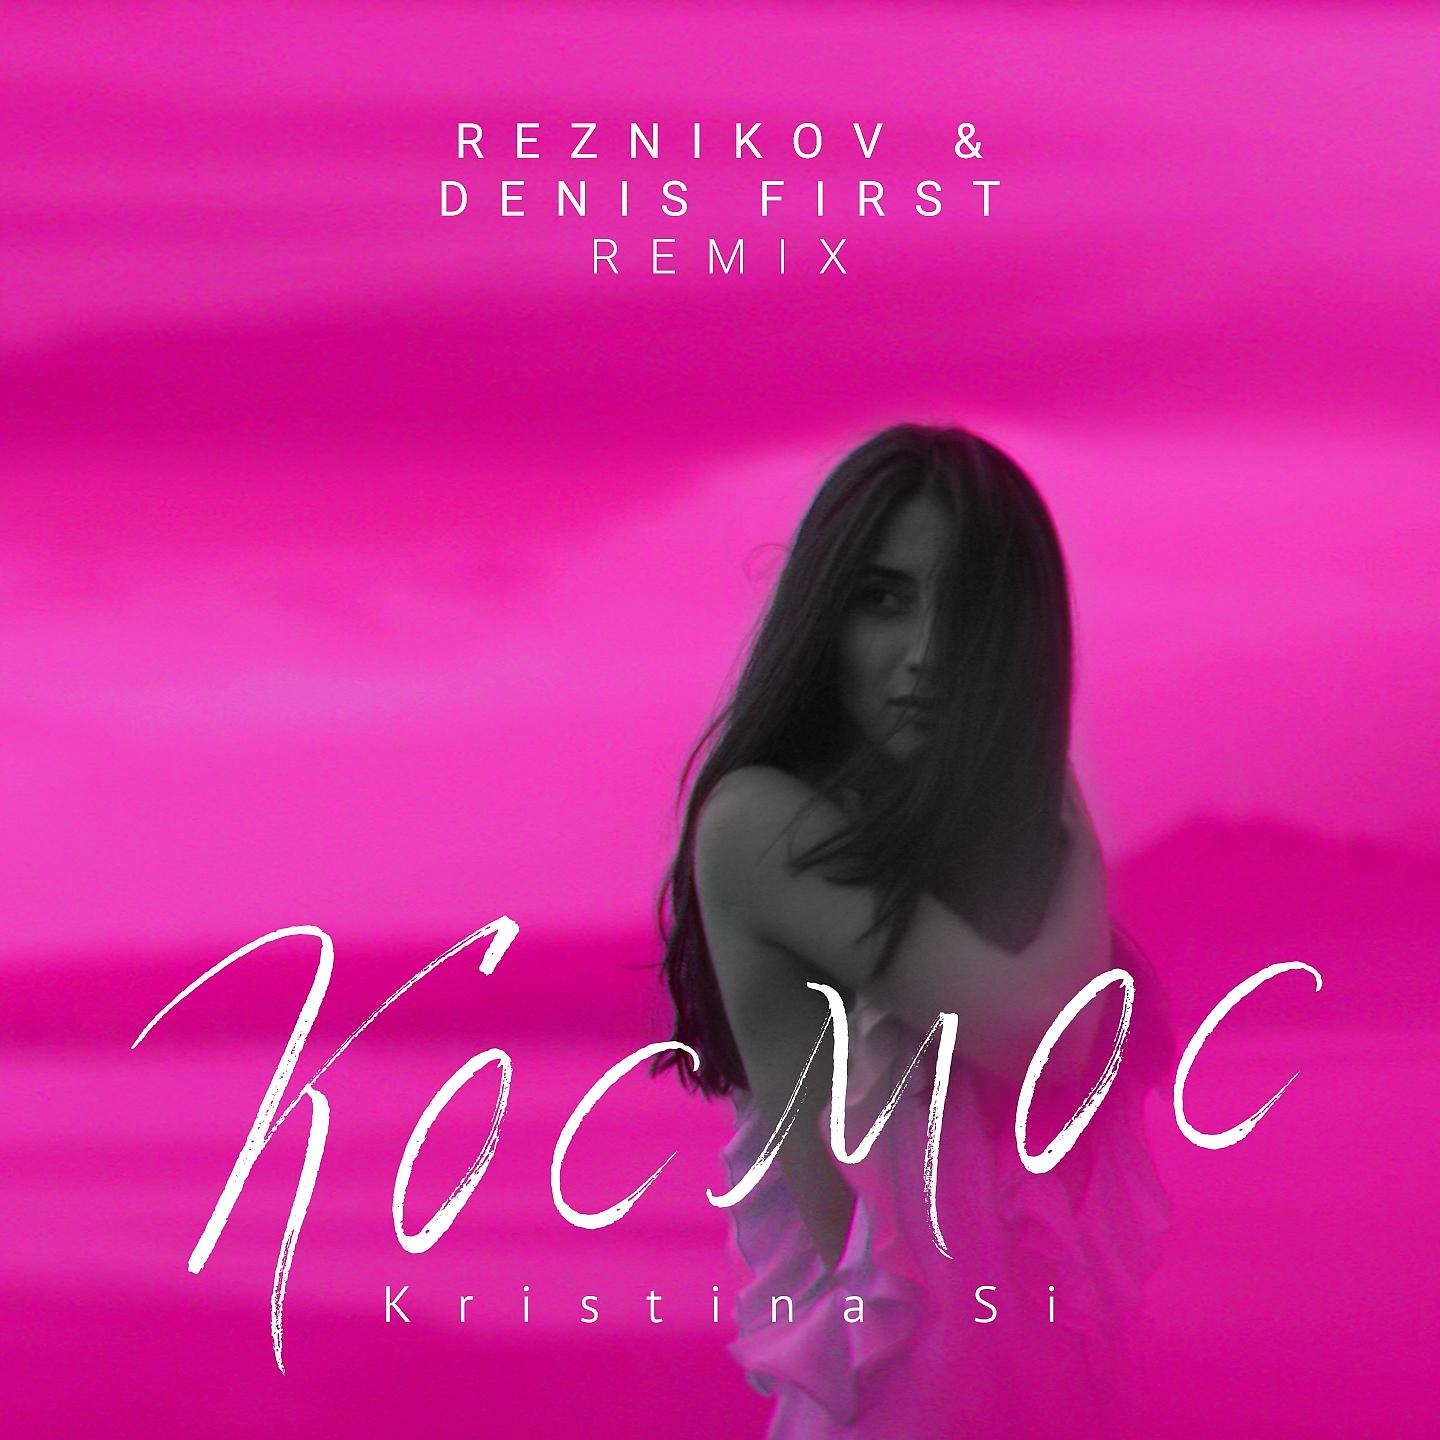 Kristina Si - Космос (Reznikov & Denis First Remix)